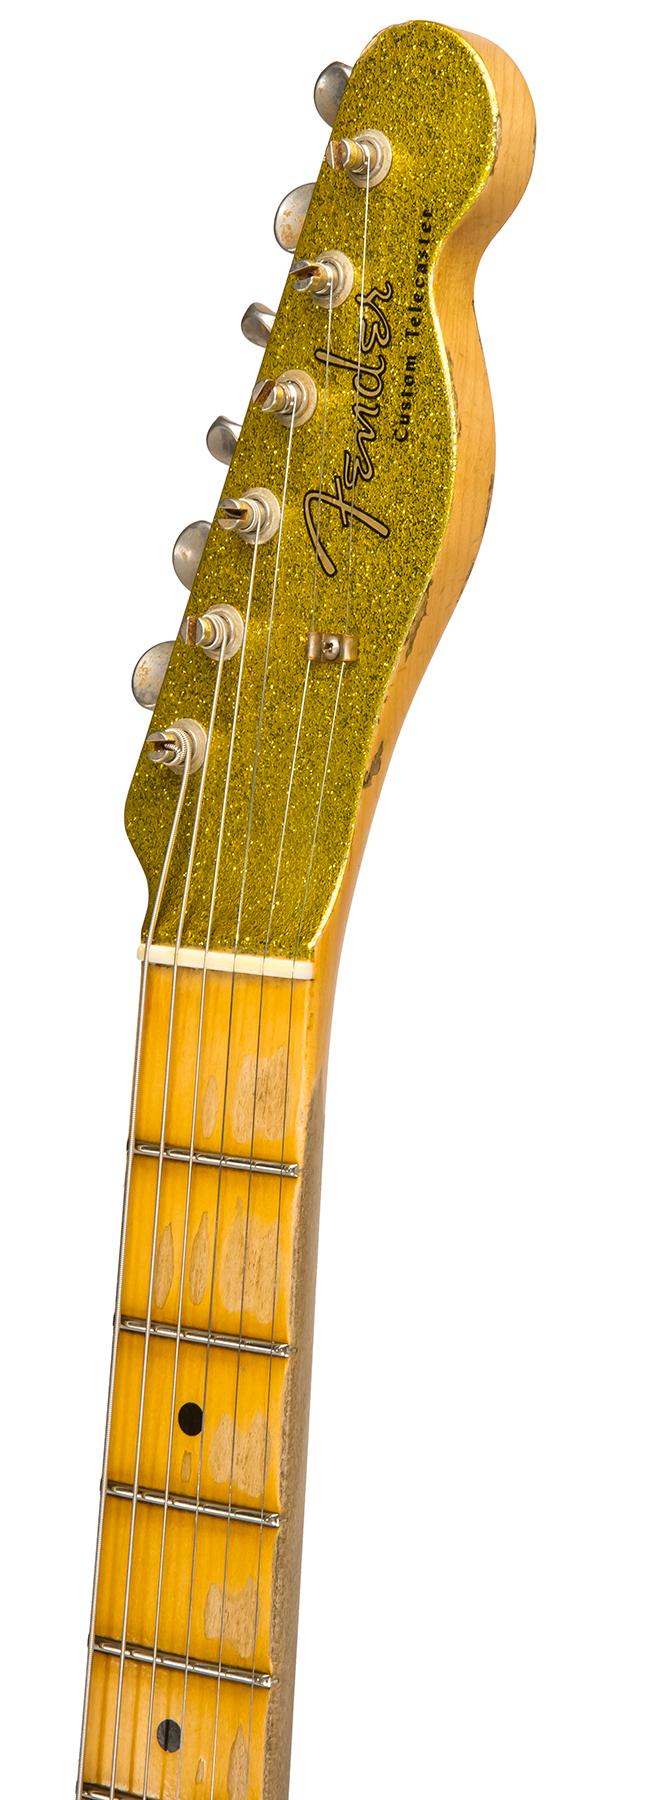 Fender Custom Shop Tele Custom 1963 2020 Ltd Rw #cz545983 - Relic Chartreuse Sparkle - E-Gitarre in Teleform - Variation 4